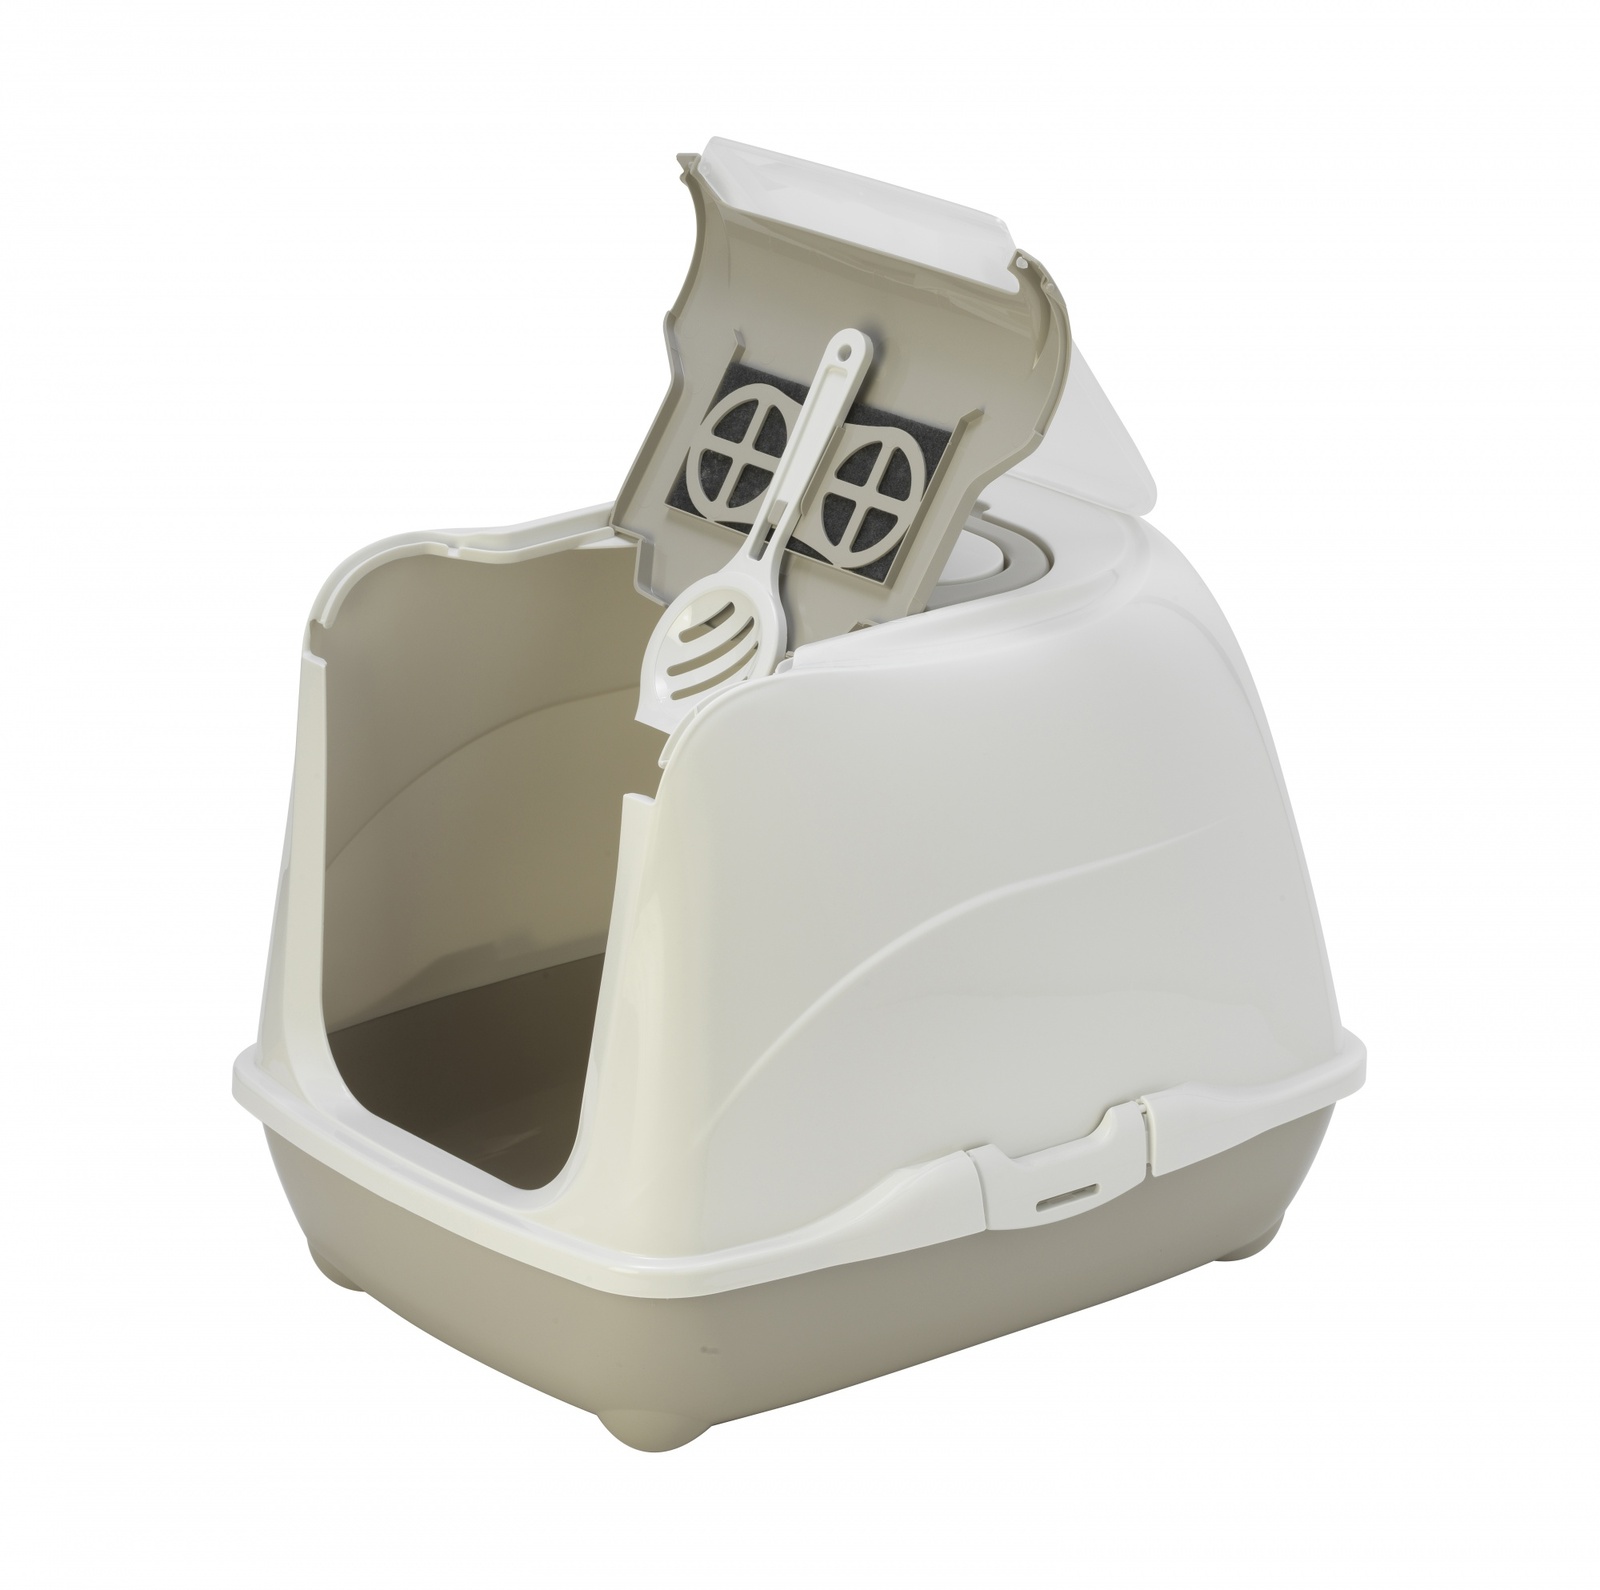 Moderna Moderna туалет-домик Flip с угольным фильтром, 50х39х37см, теплый серый (1,2 кг) moderna moderna лежак domus пластиковый теплый серый 2 кг